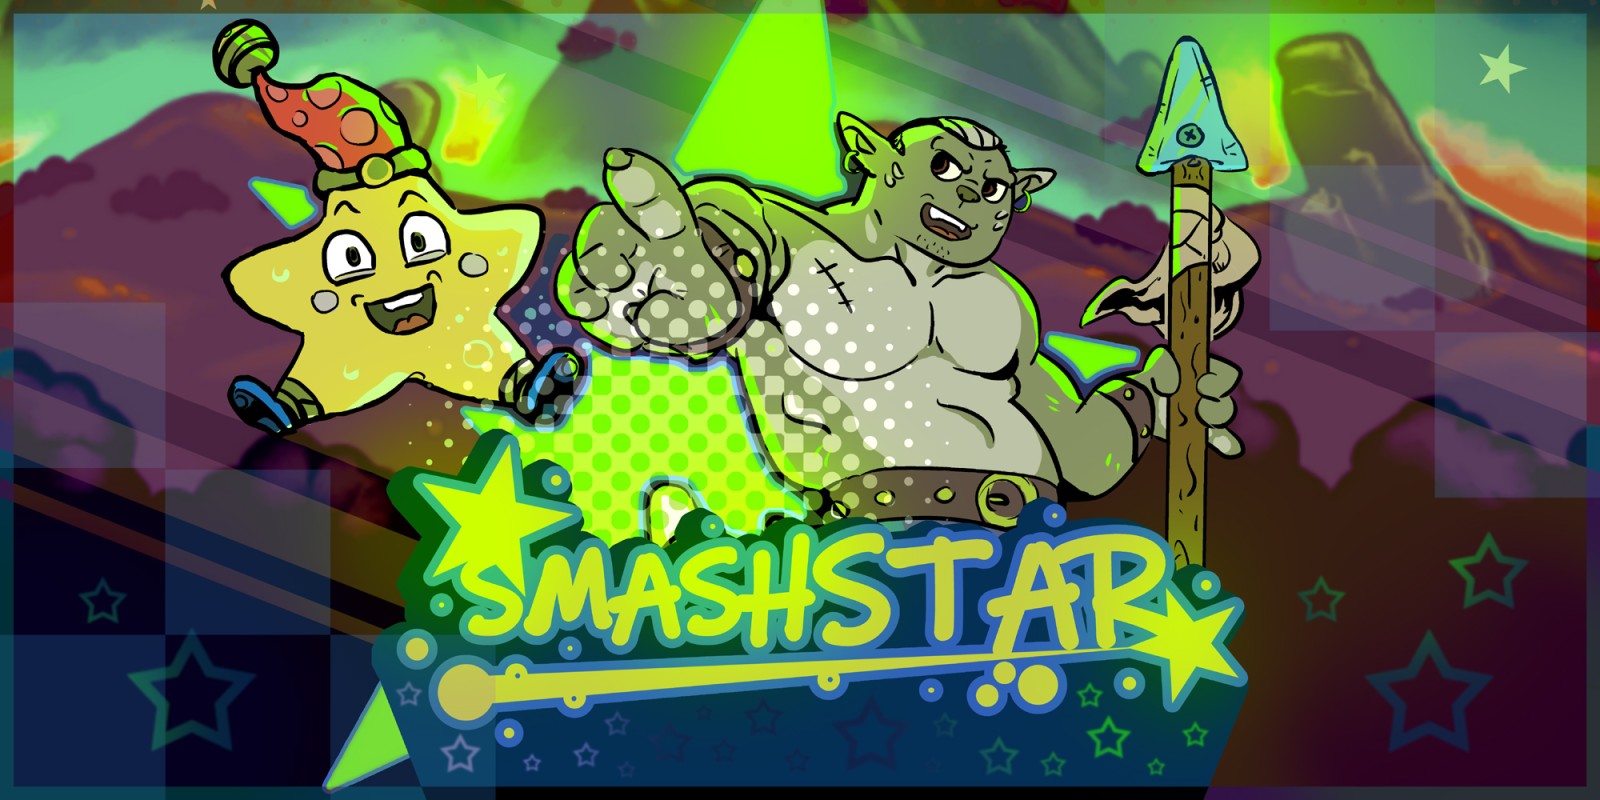 Smash Star